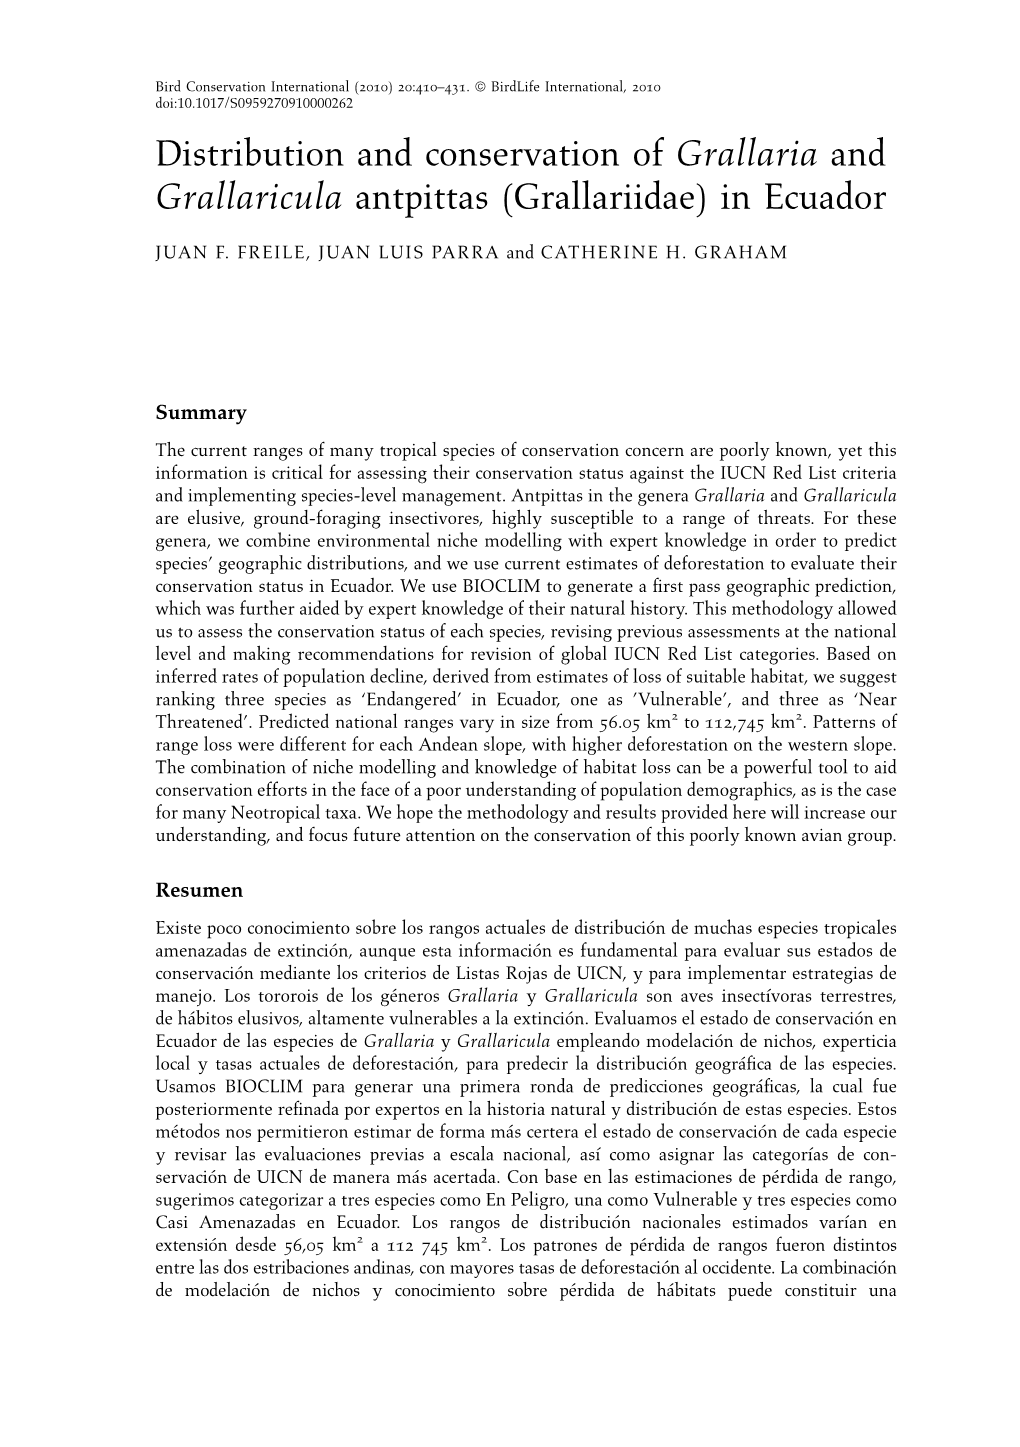 Distribution and Conservation of Grallaria and Grallaricula Antpittas (Grallariidae) in Ecuador